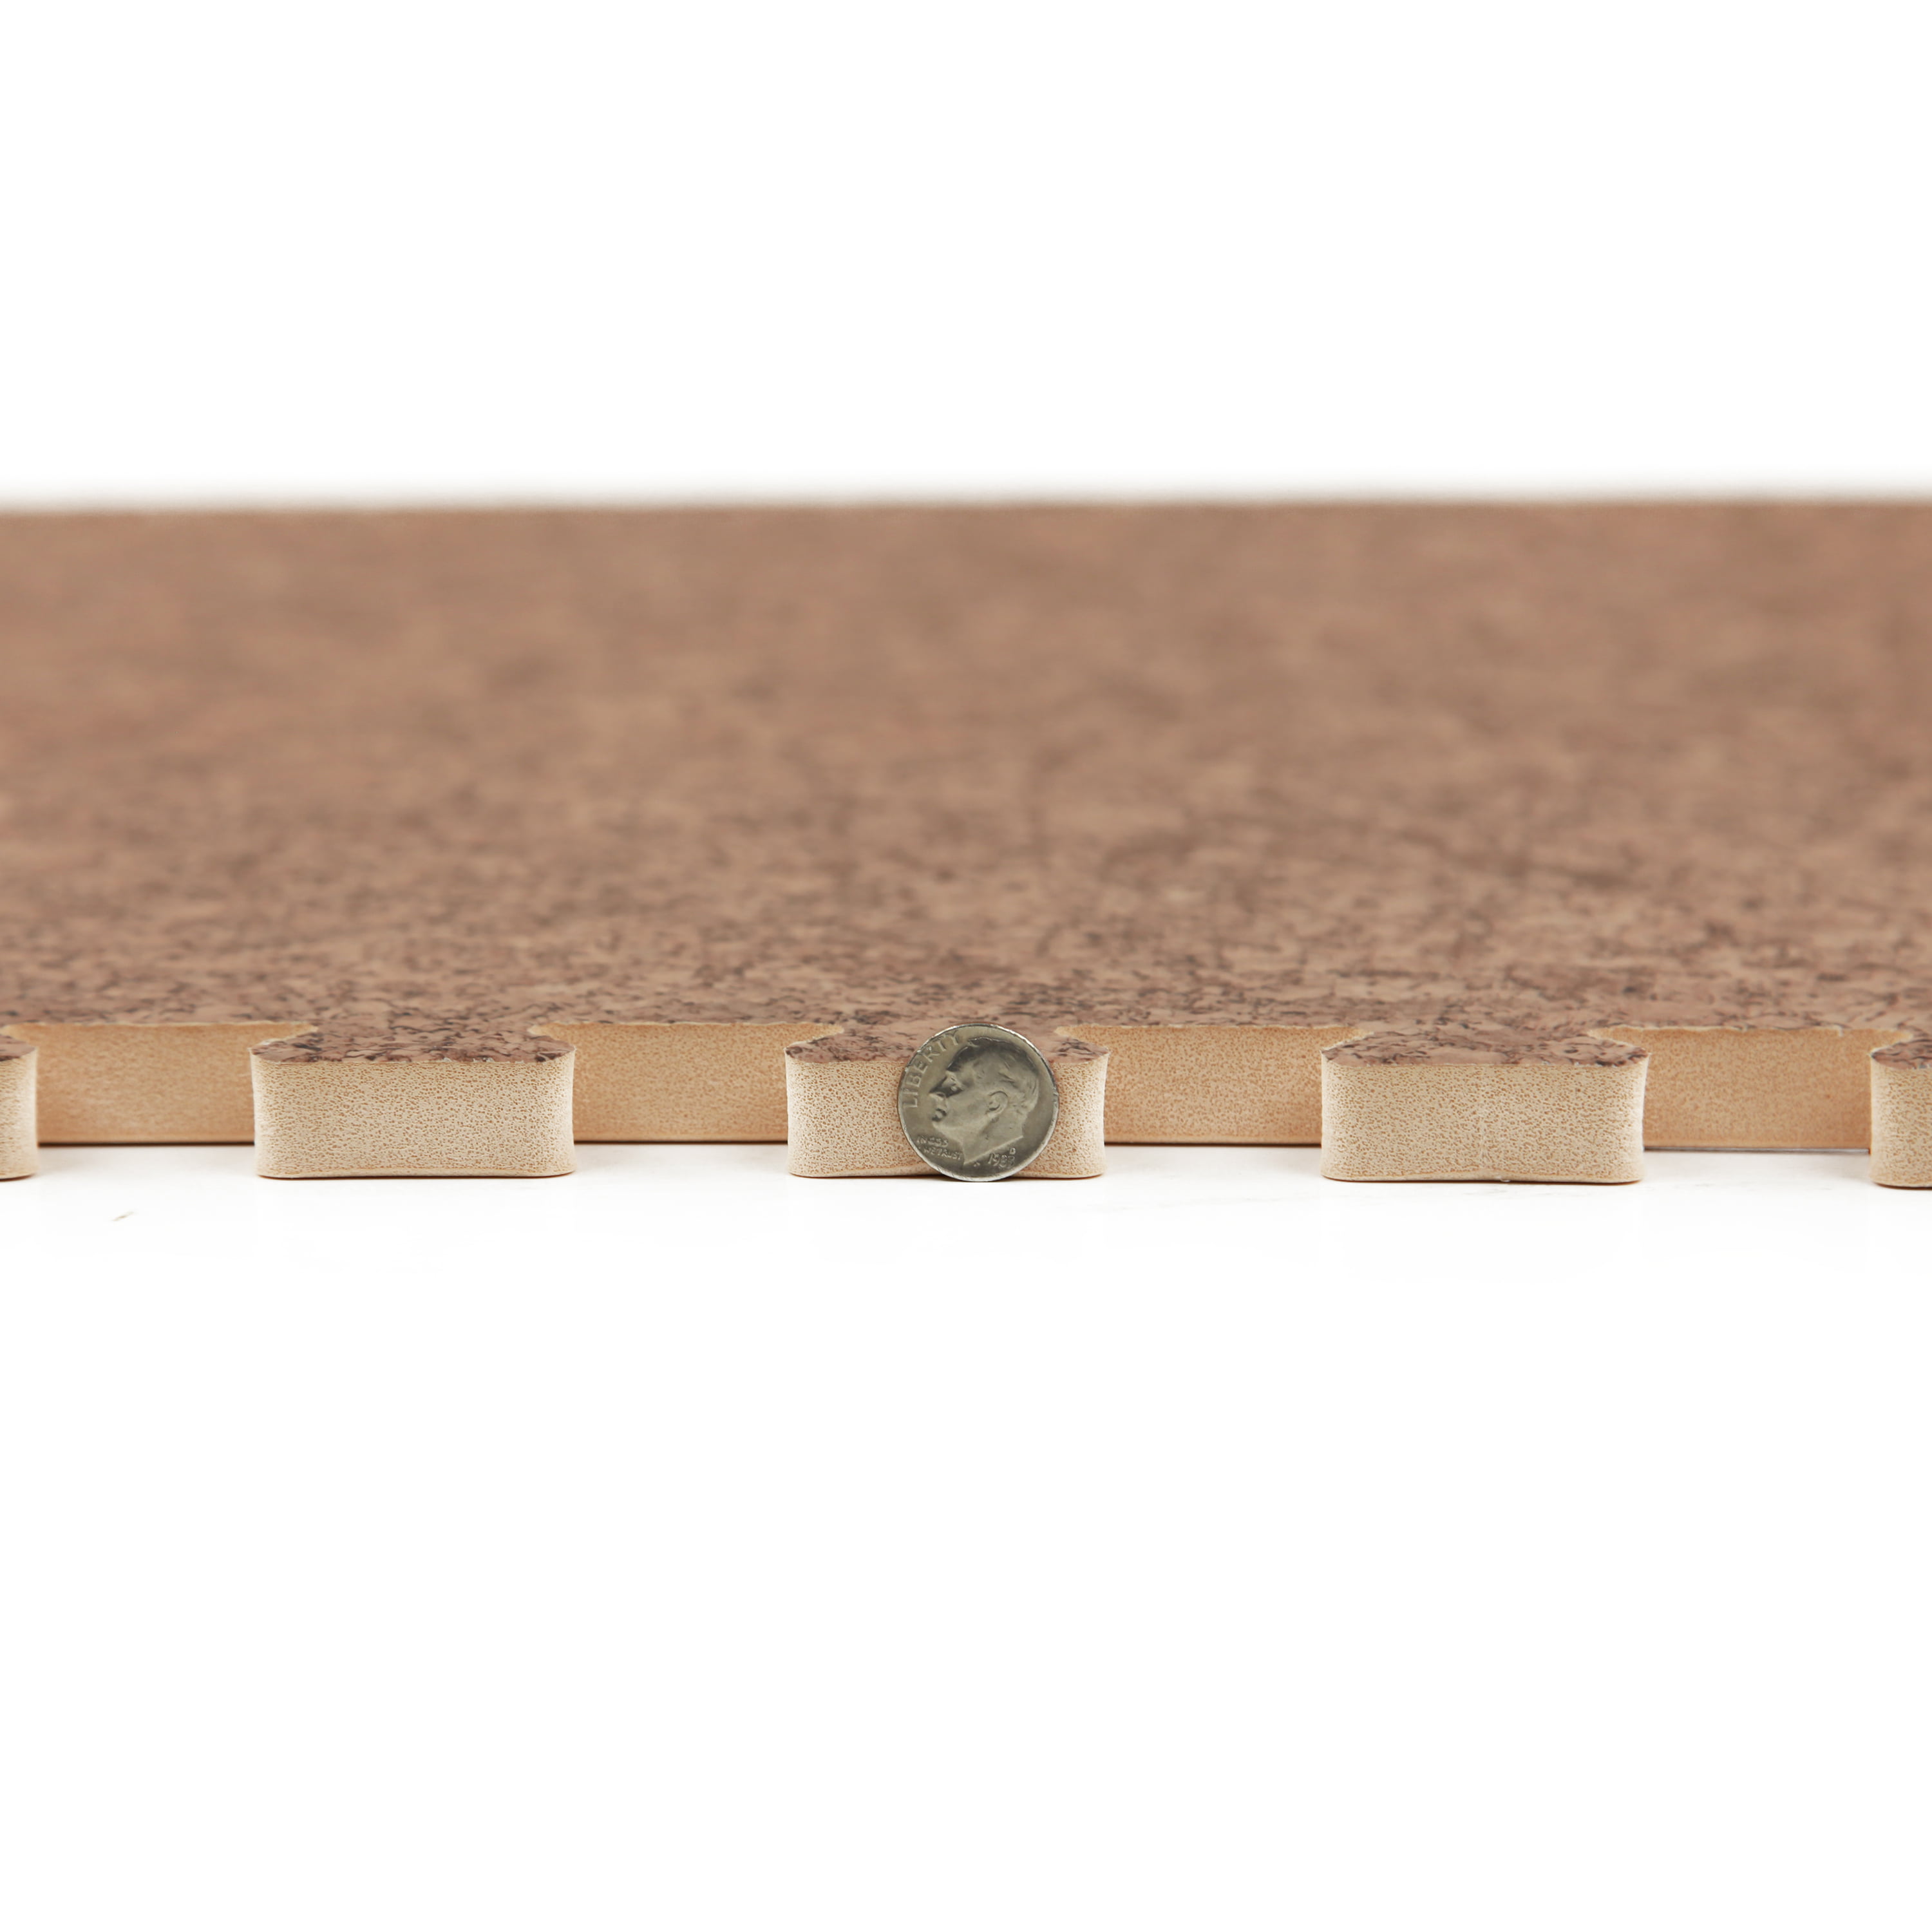 FlooringInc Interlocking Foam Playmat (24 Tiles) & Reviews